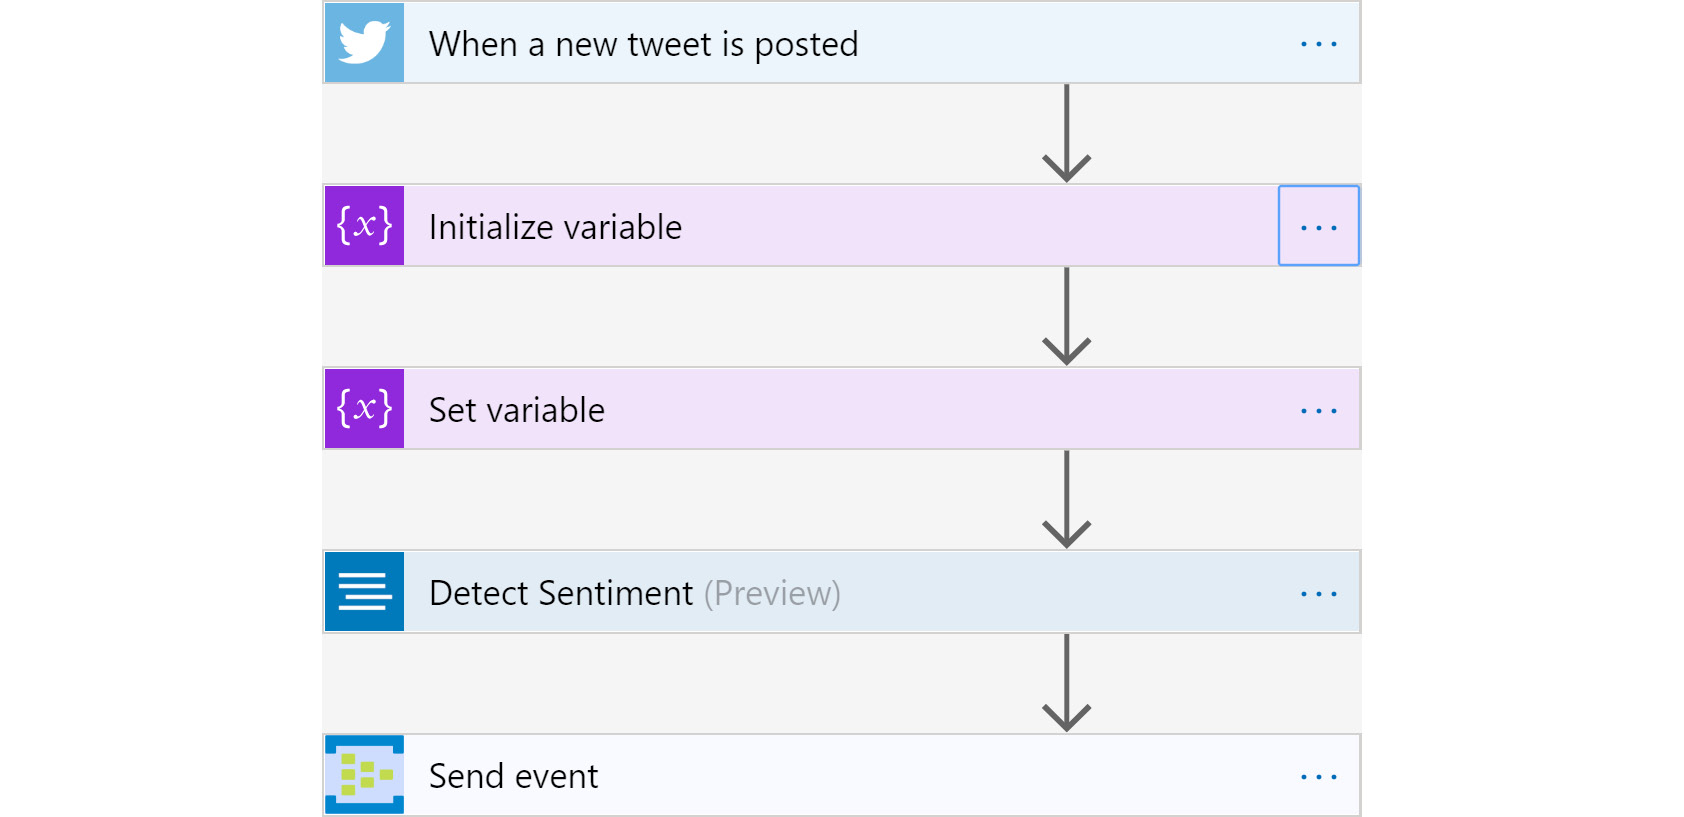 Flowchart for analyzing tweet sentiments